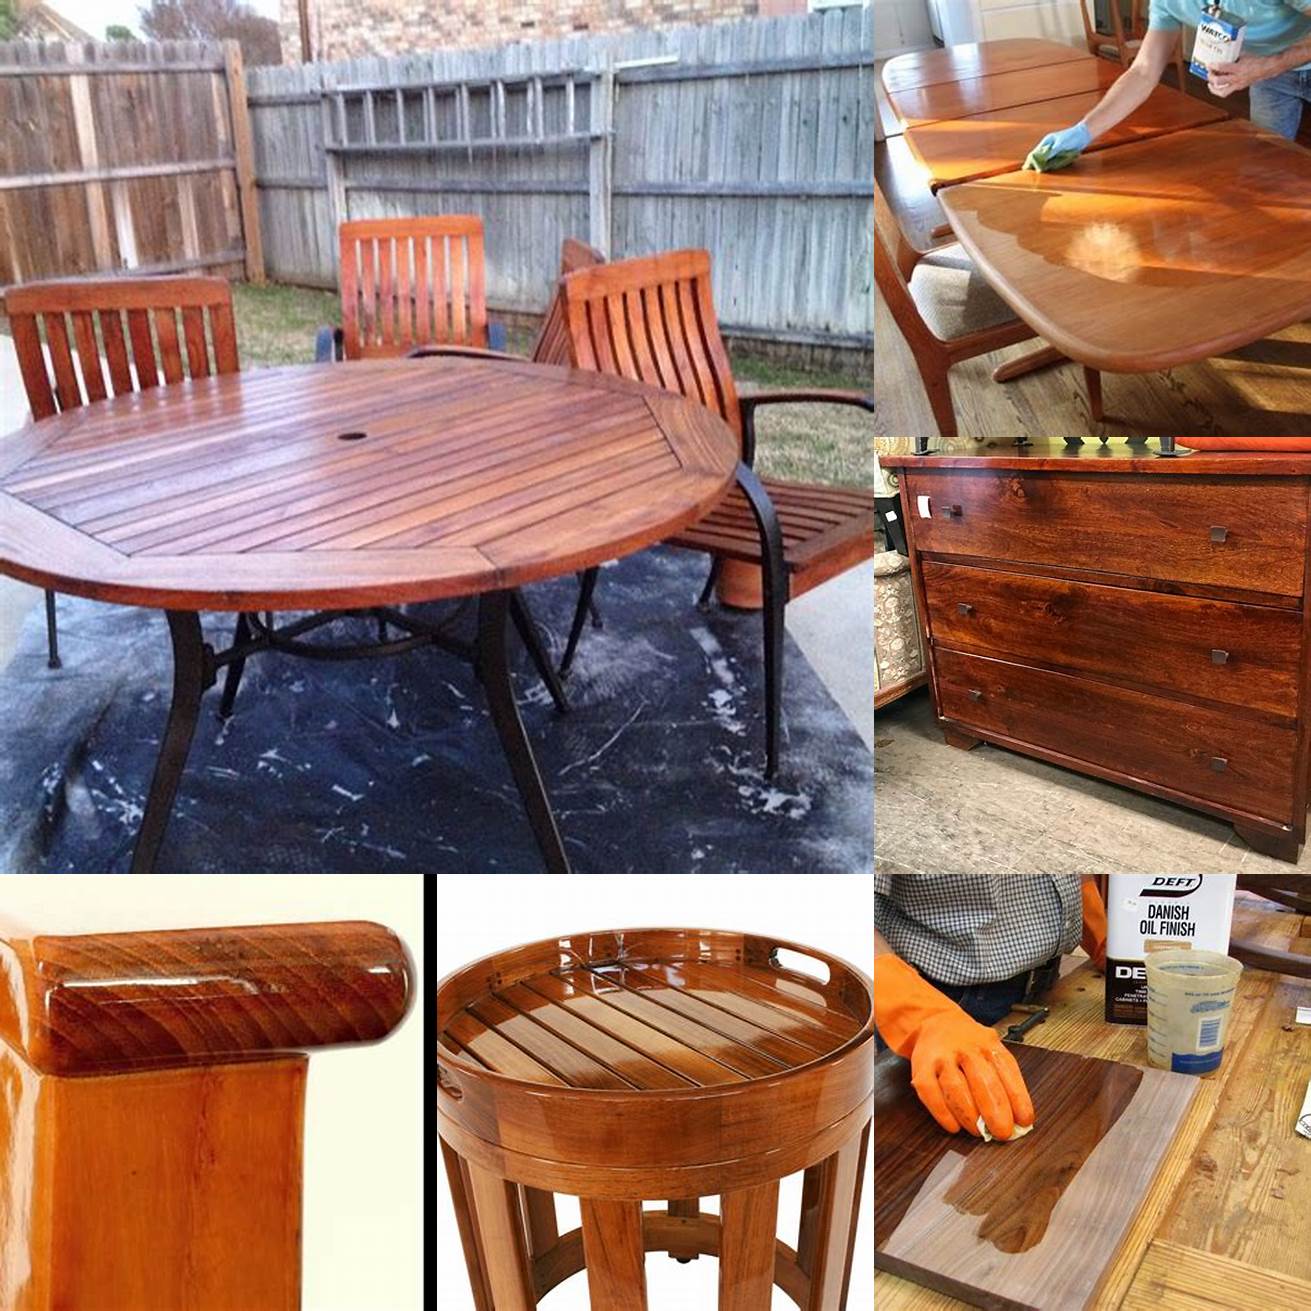 Teak furniture with a varnished finish